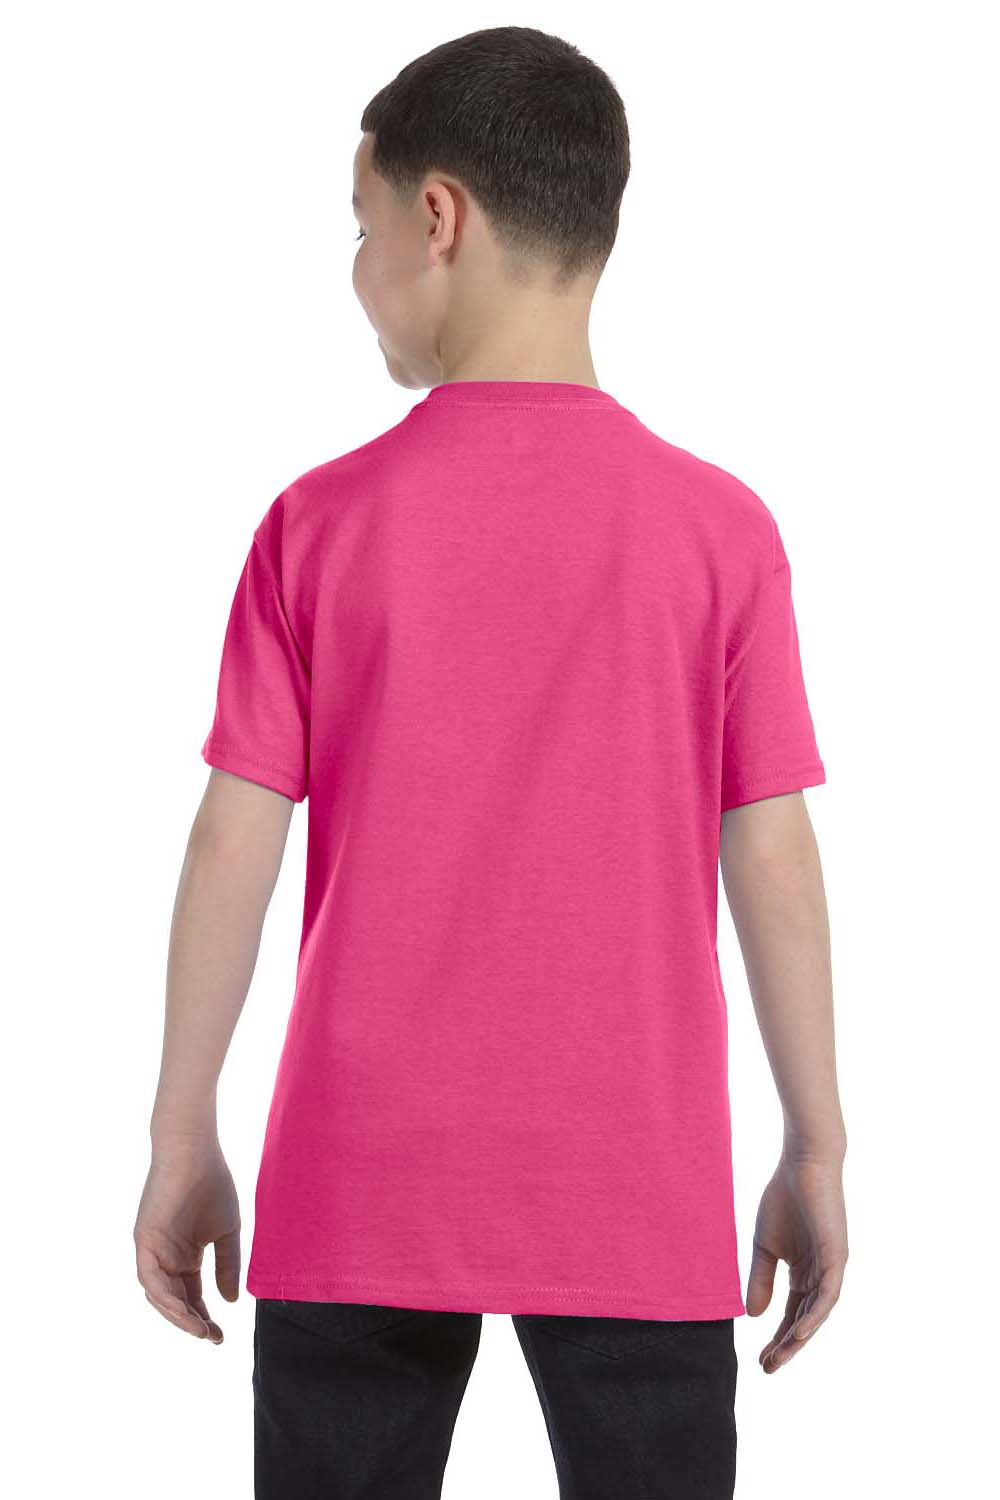 Hanes 54500 Youth ComfortSoft Short Sleeve Crewneck T-Shirt Wow Pink Back